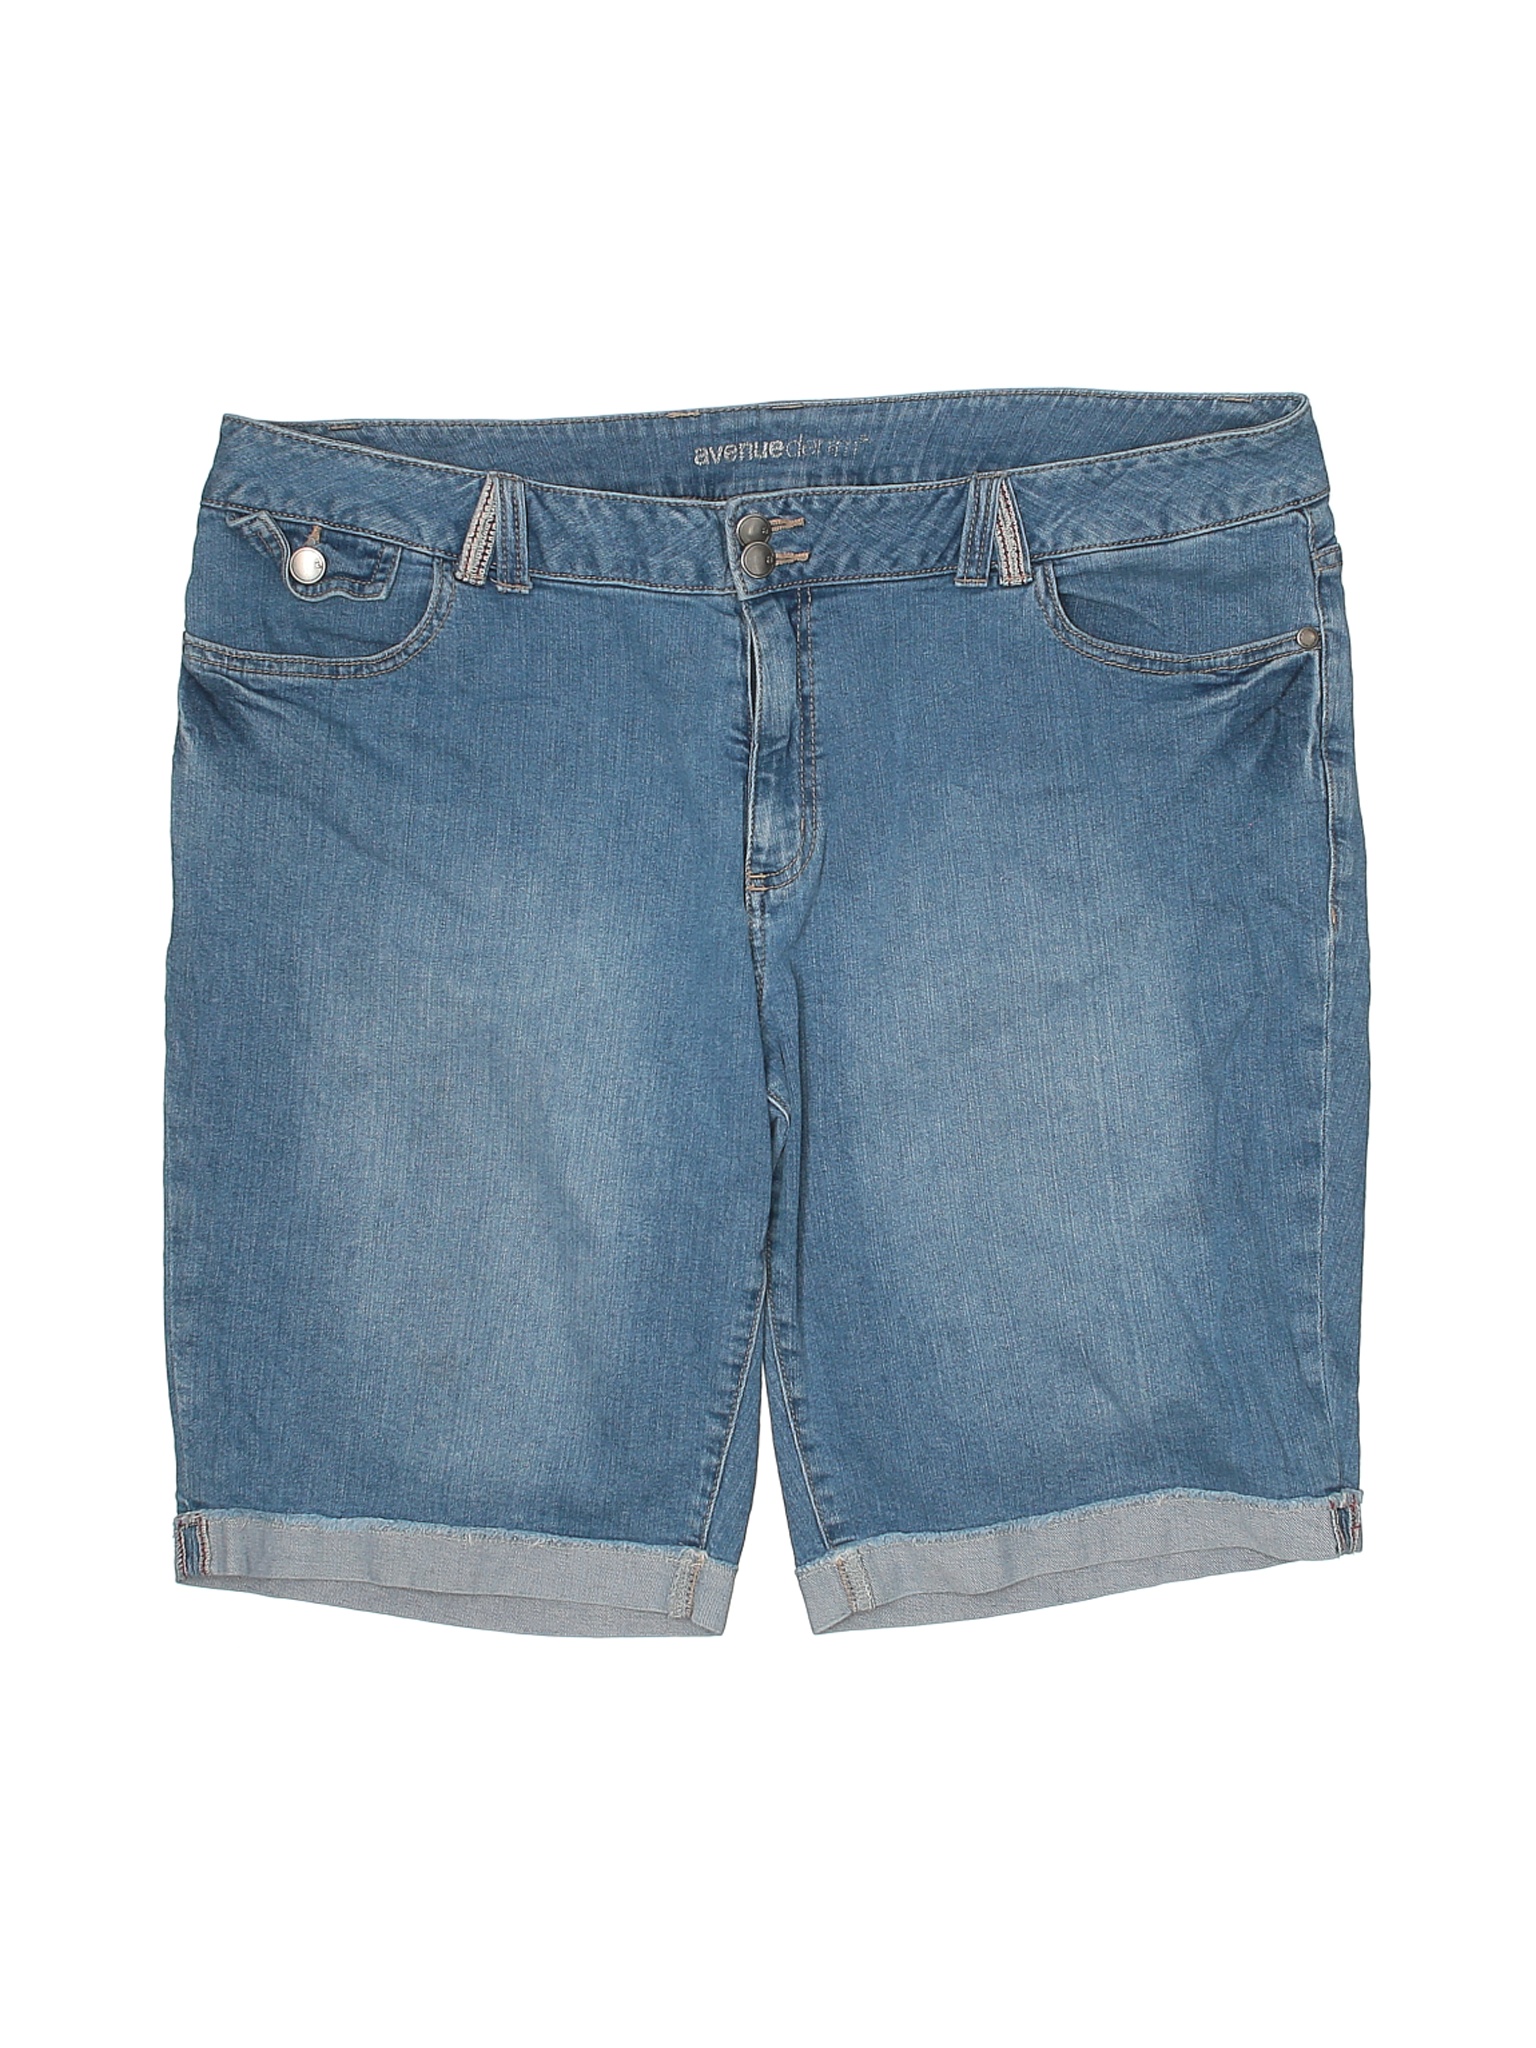 Avenue Women Blue Denim Shorts 22 Plus | eBay